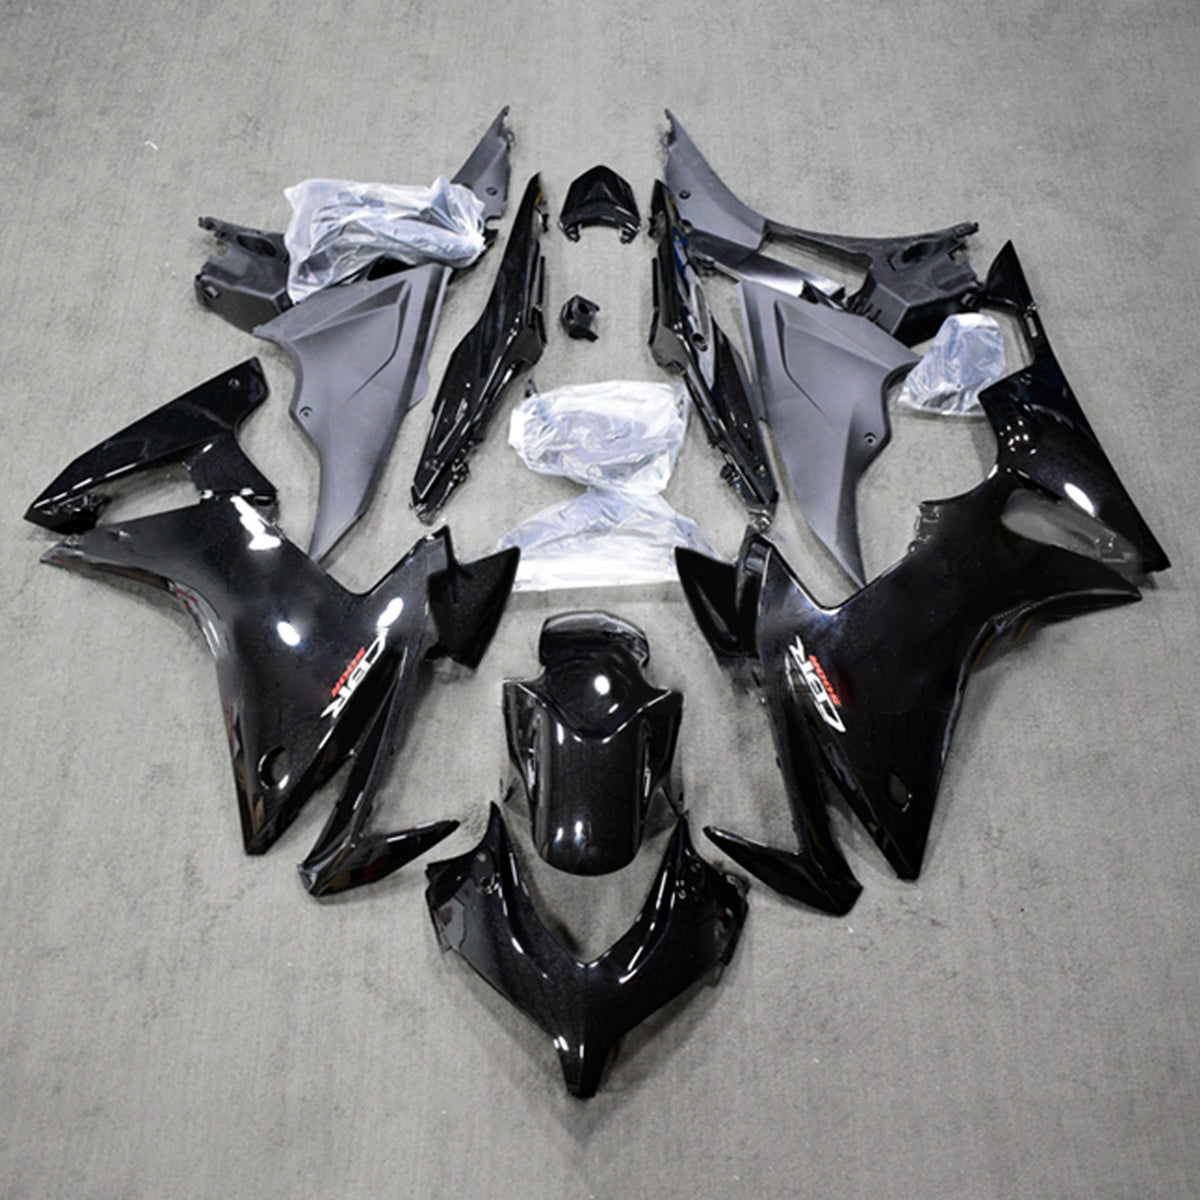 Kit carena Amotopart 2013-2015 CBR500R Honda nero lucido